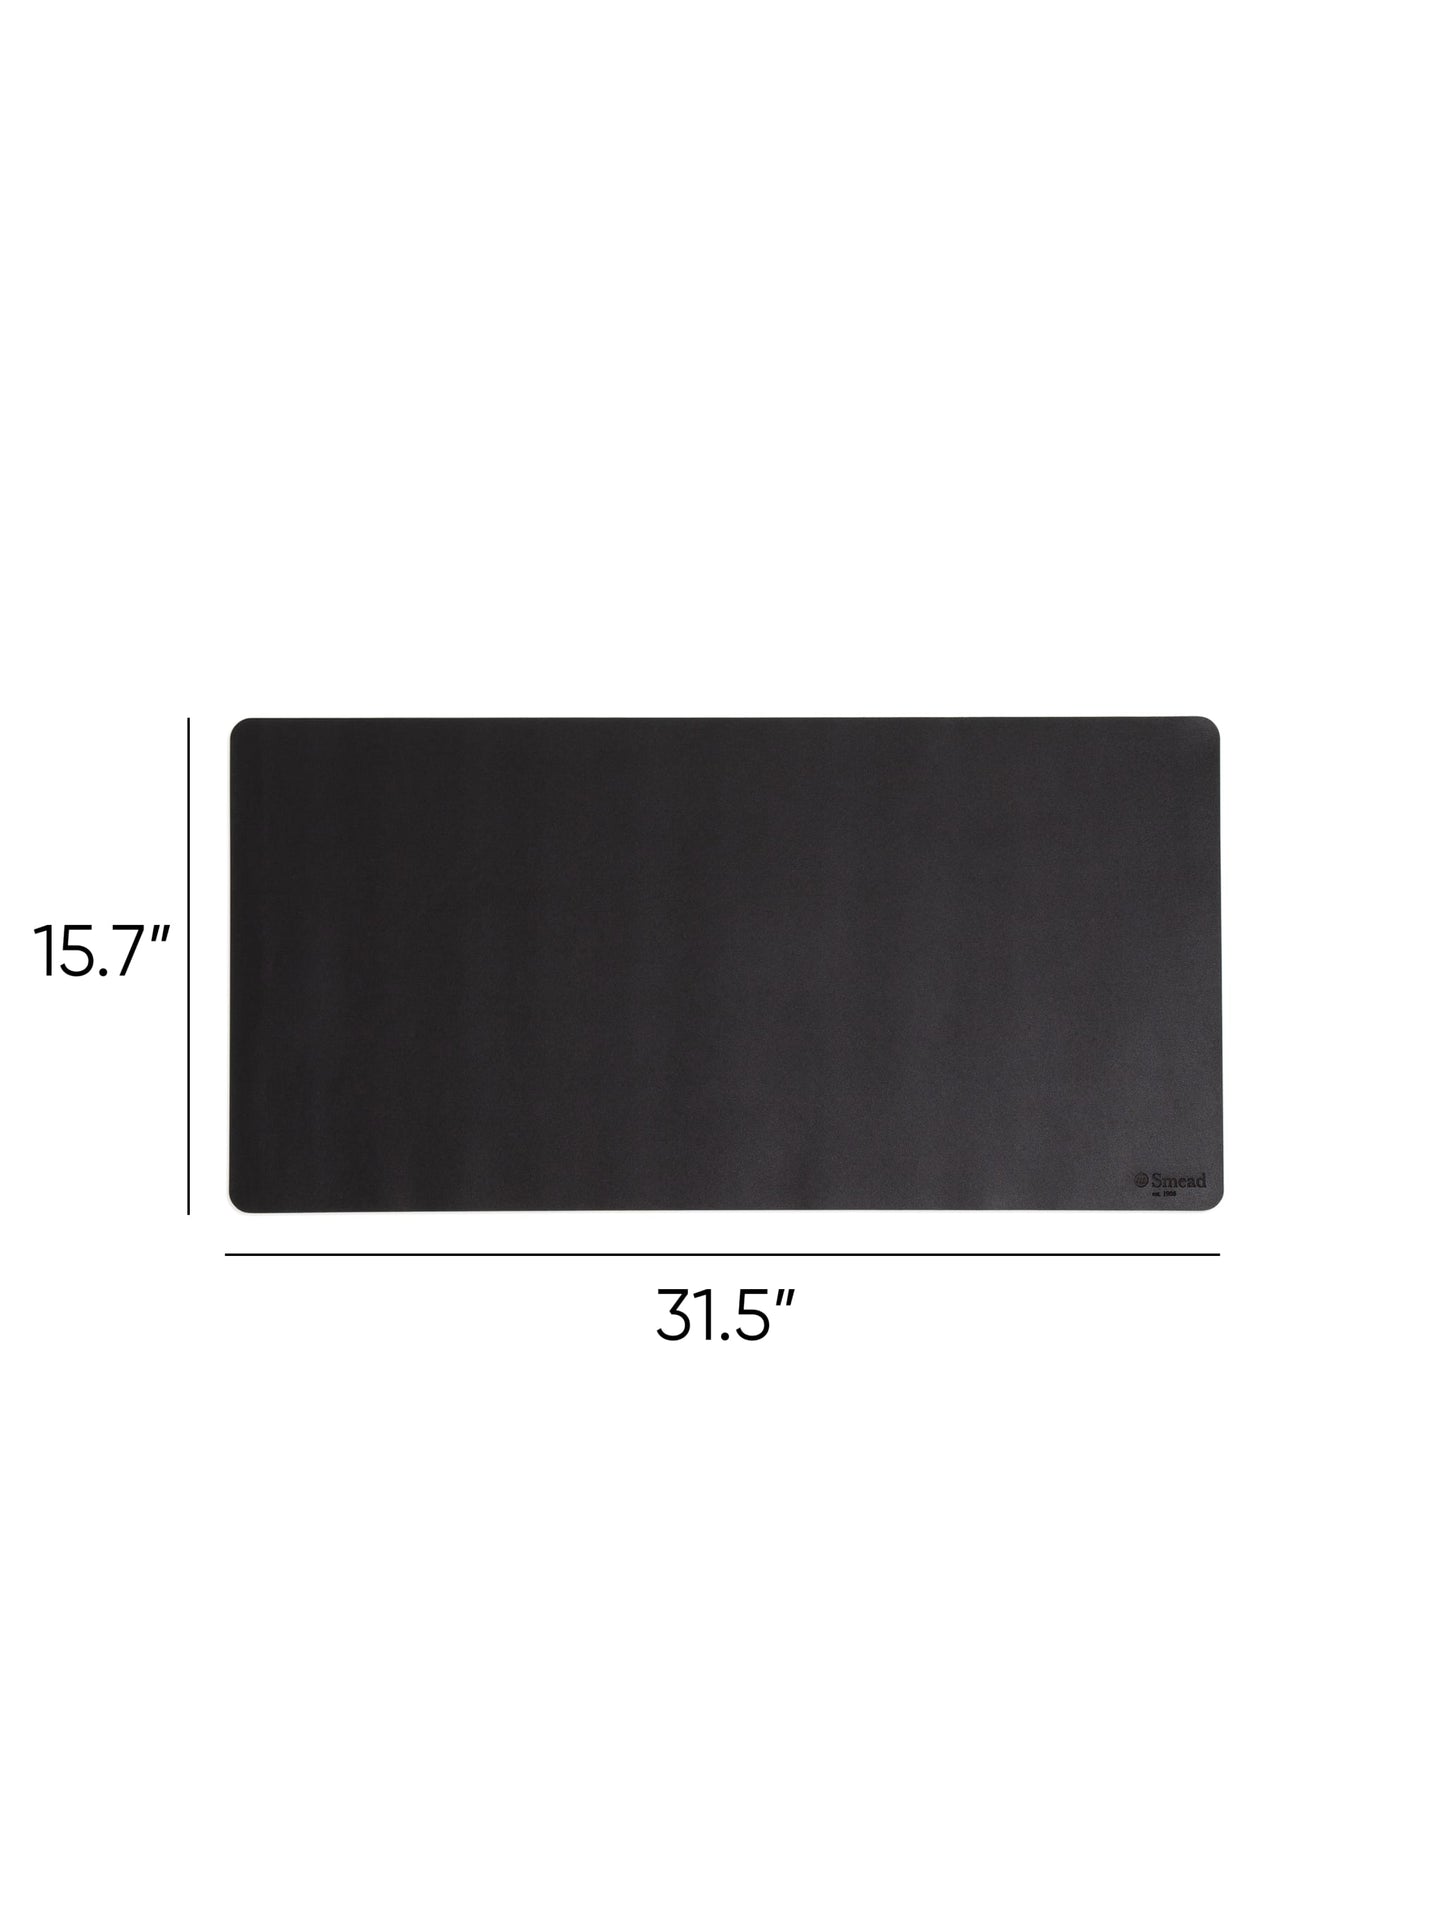 Vegan Leather Desk Pad, Charcoal Color, 31.5"X15.7" Size, 086486648332